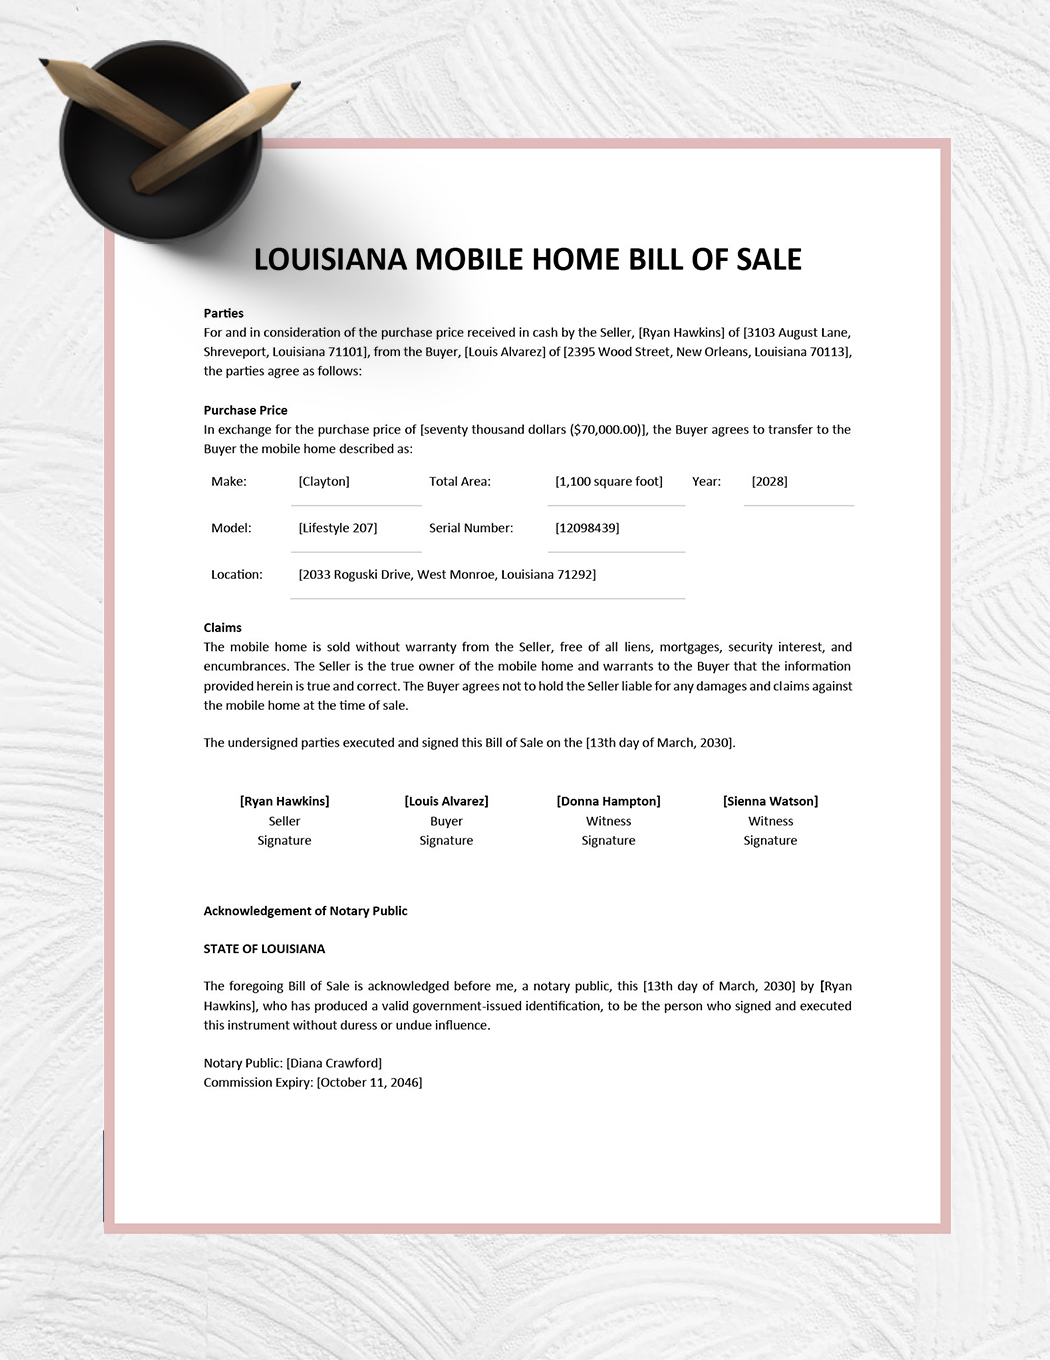 Louisiana Mobile Home Bill of Sale Template